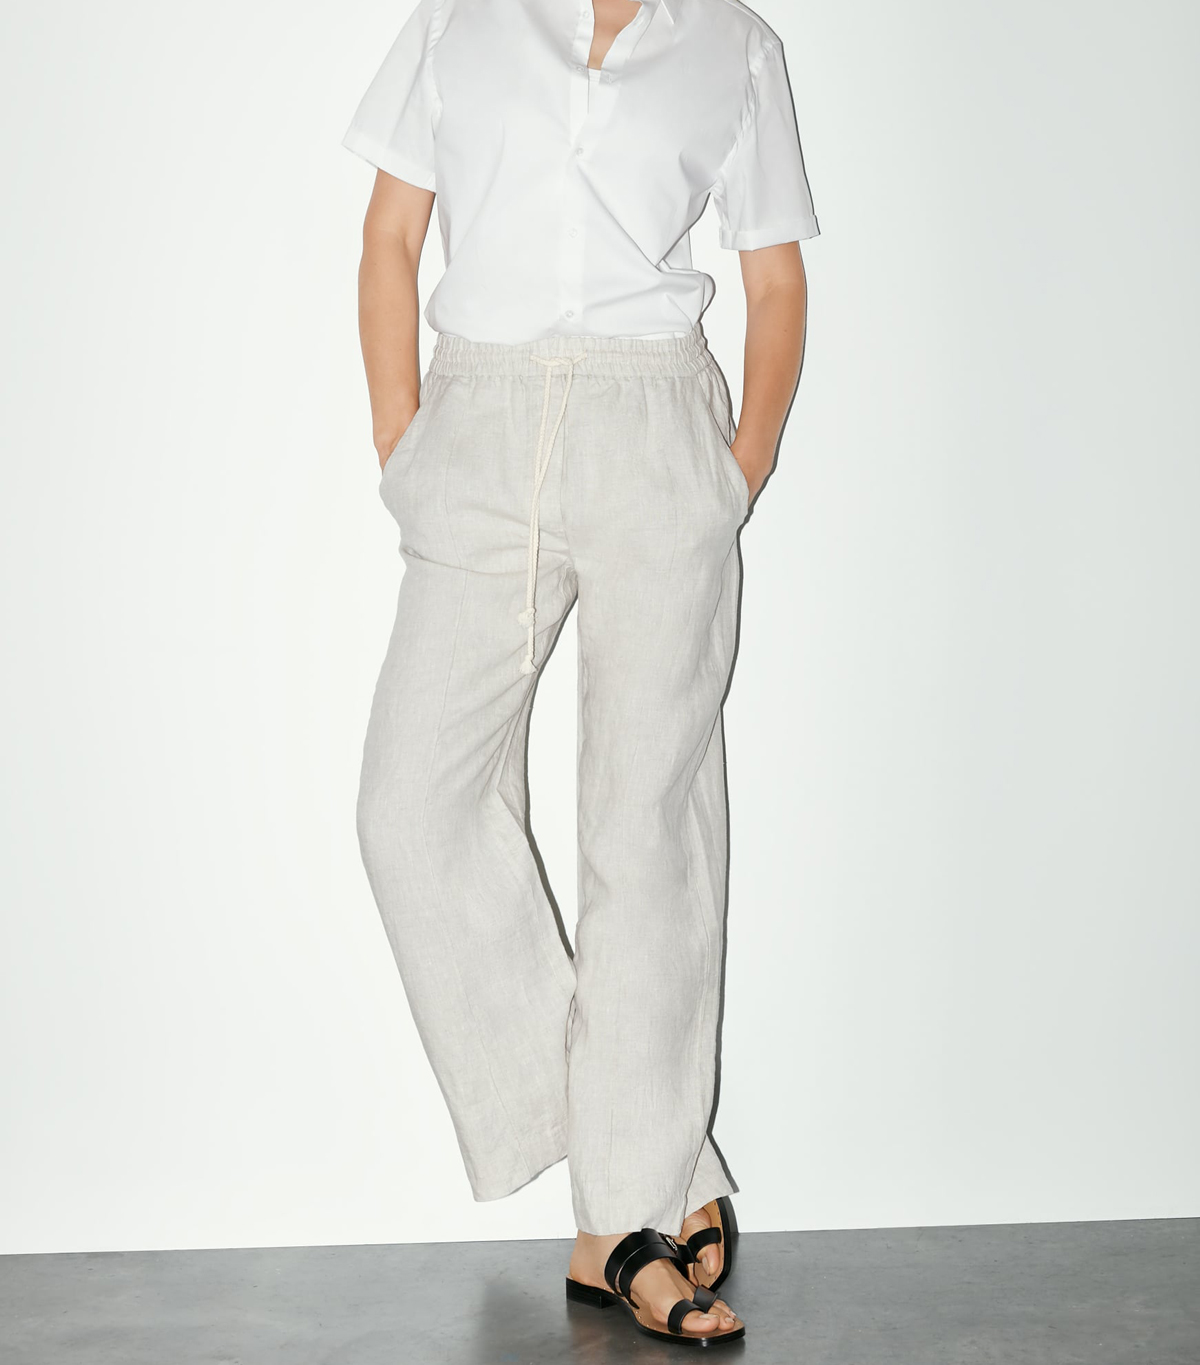 zara white linen trousers